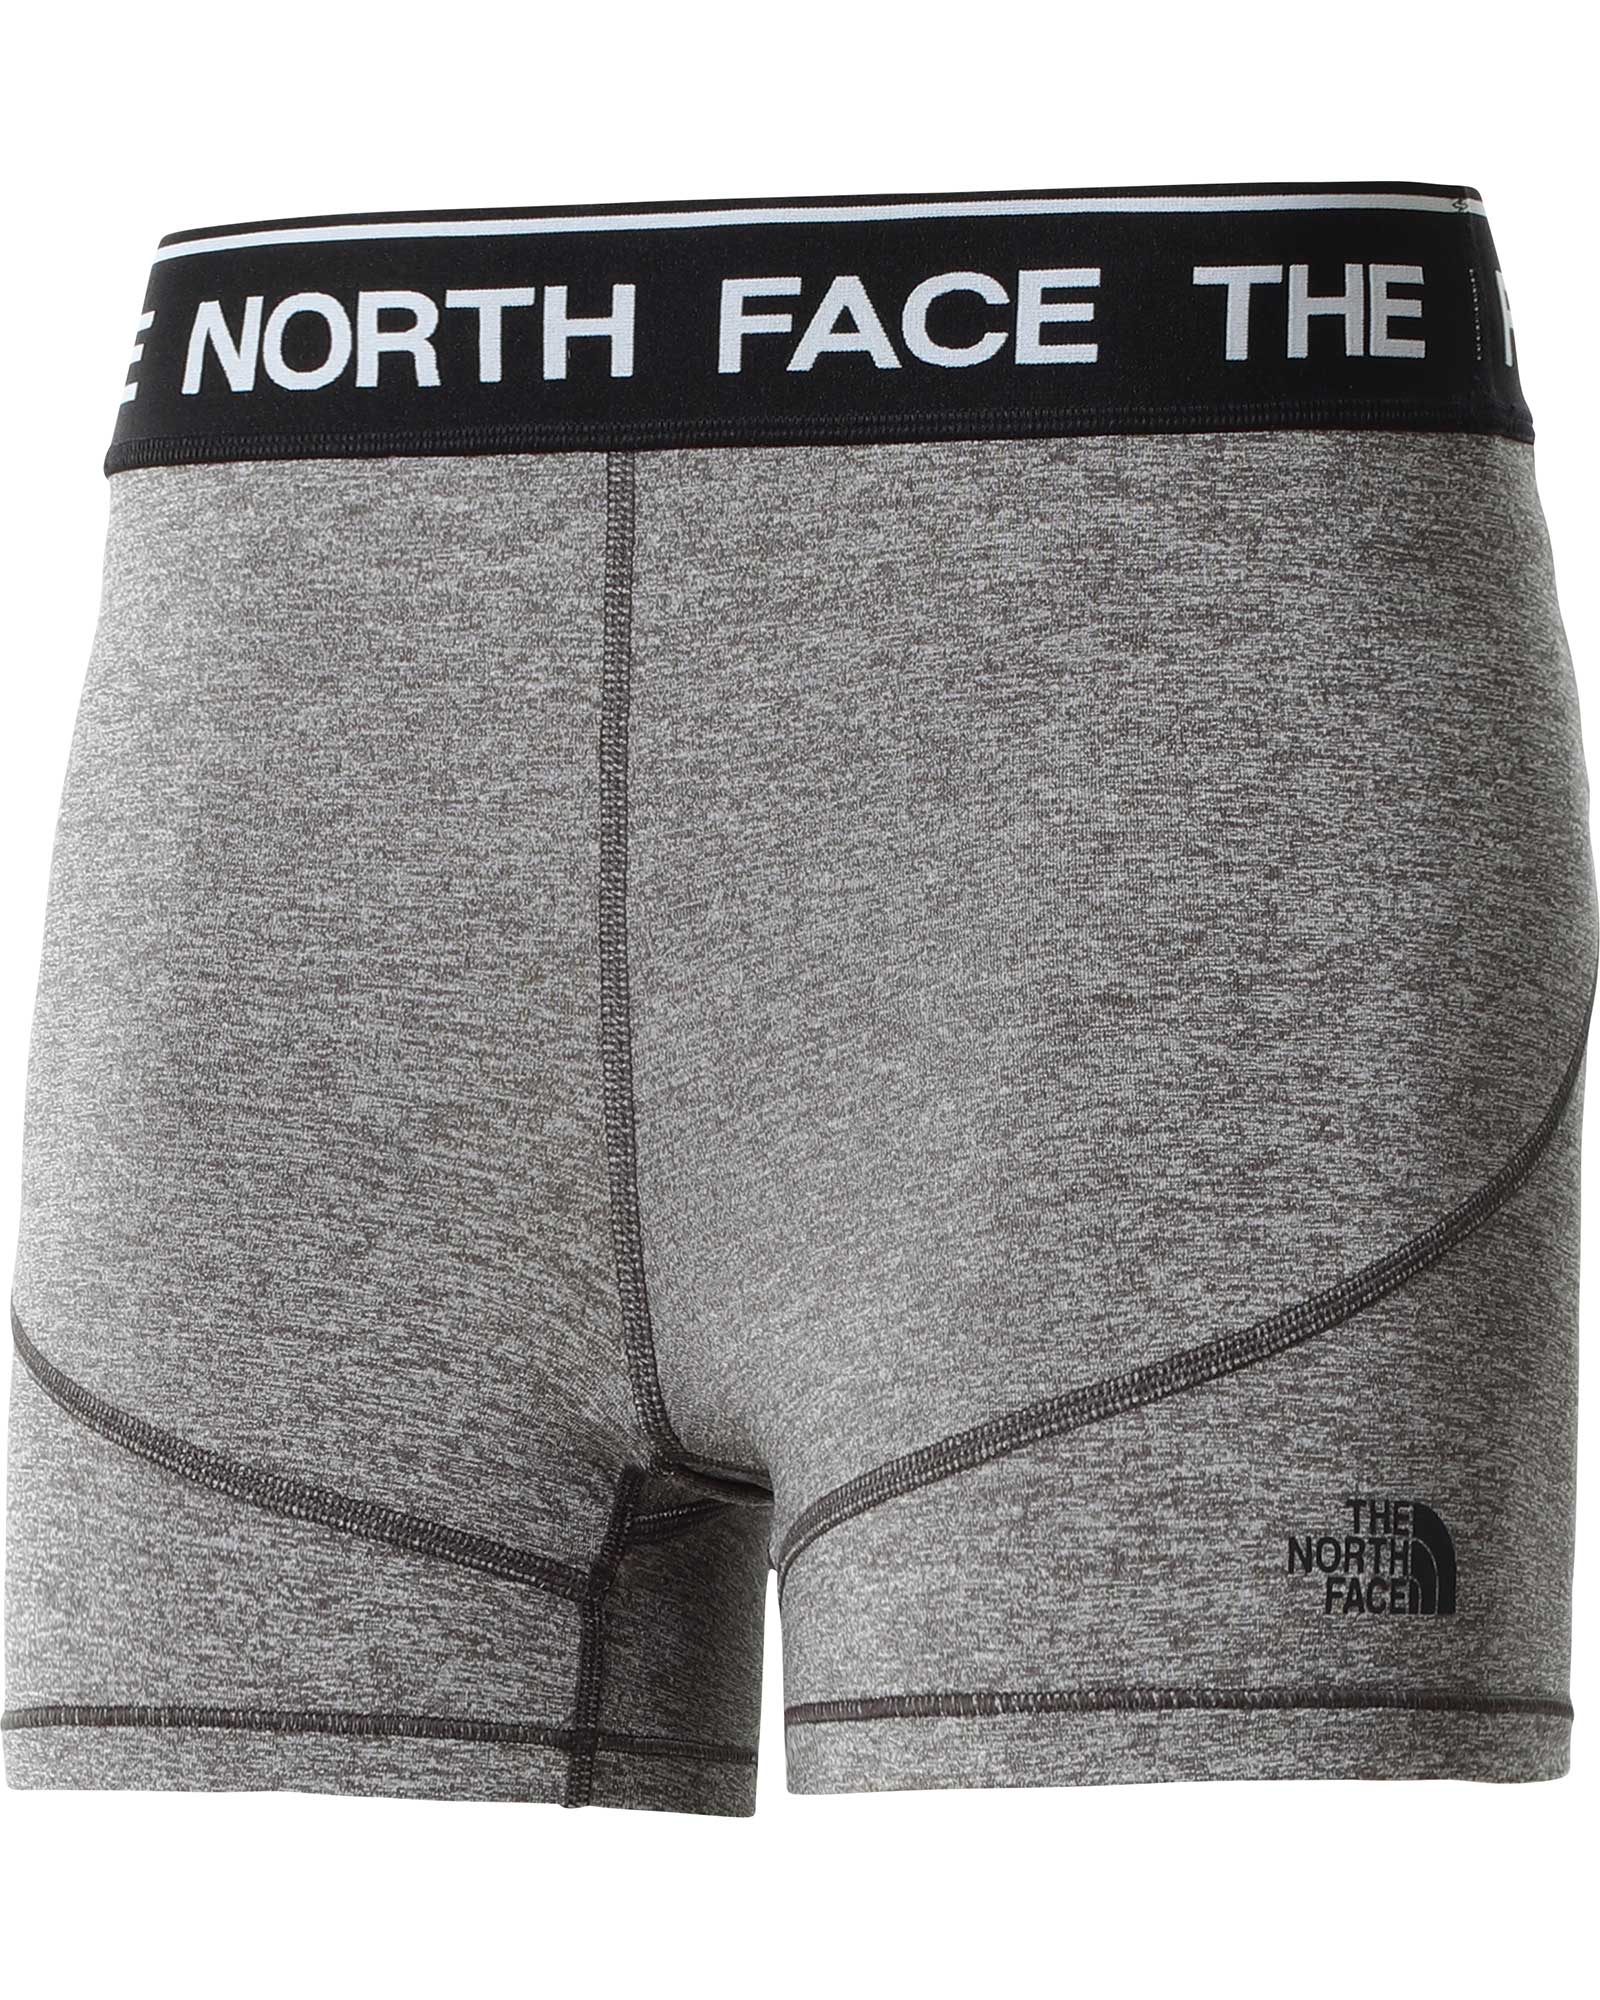 The North Face Women’s Training Shorts - TNF Medium Grey Heather L